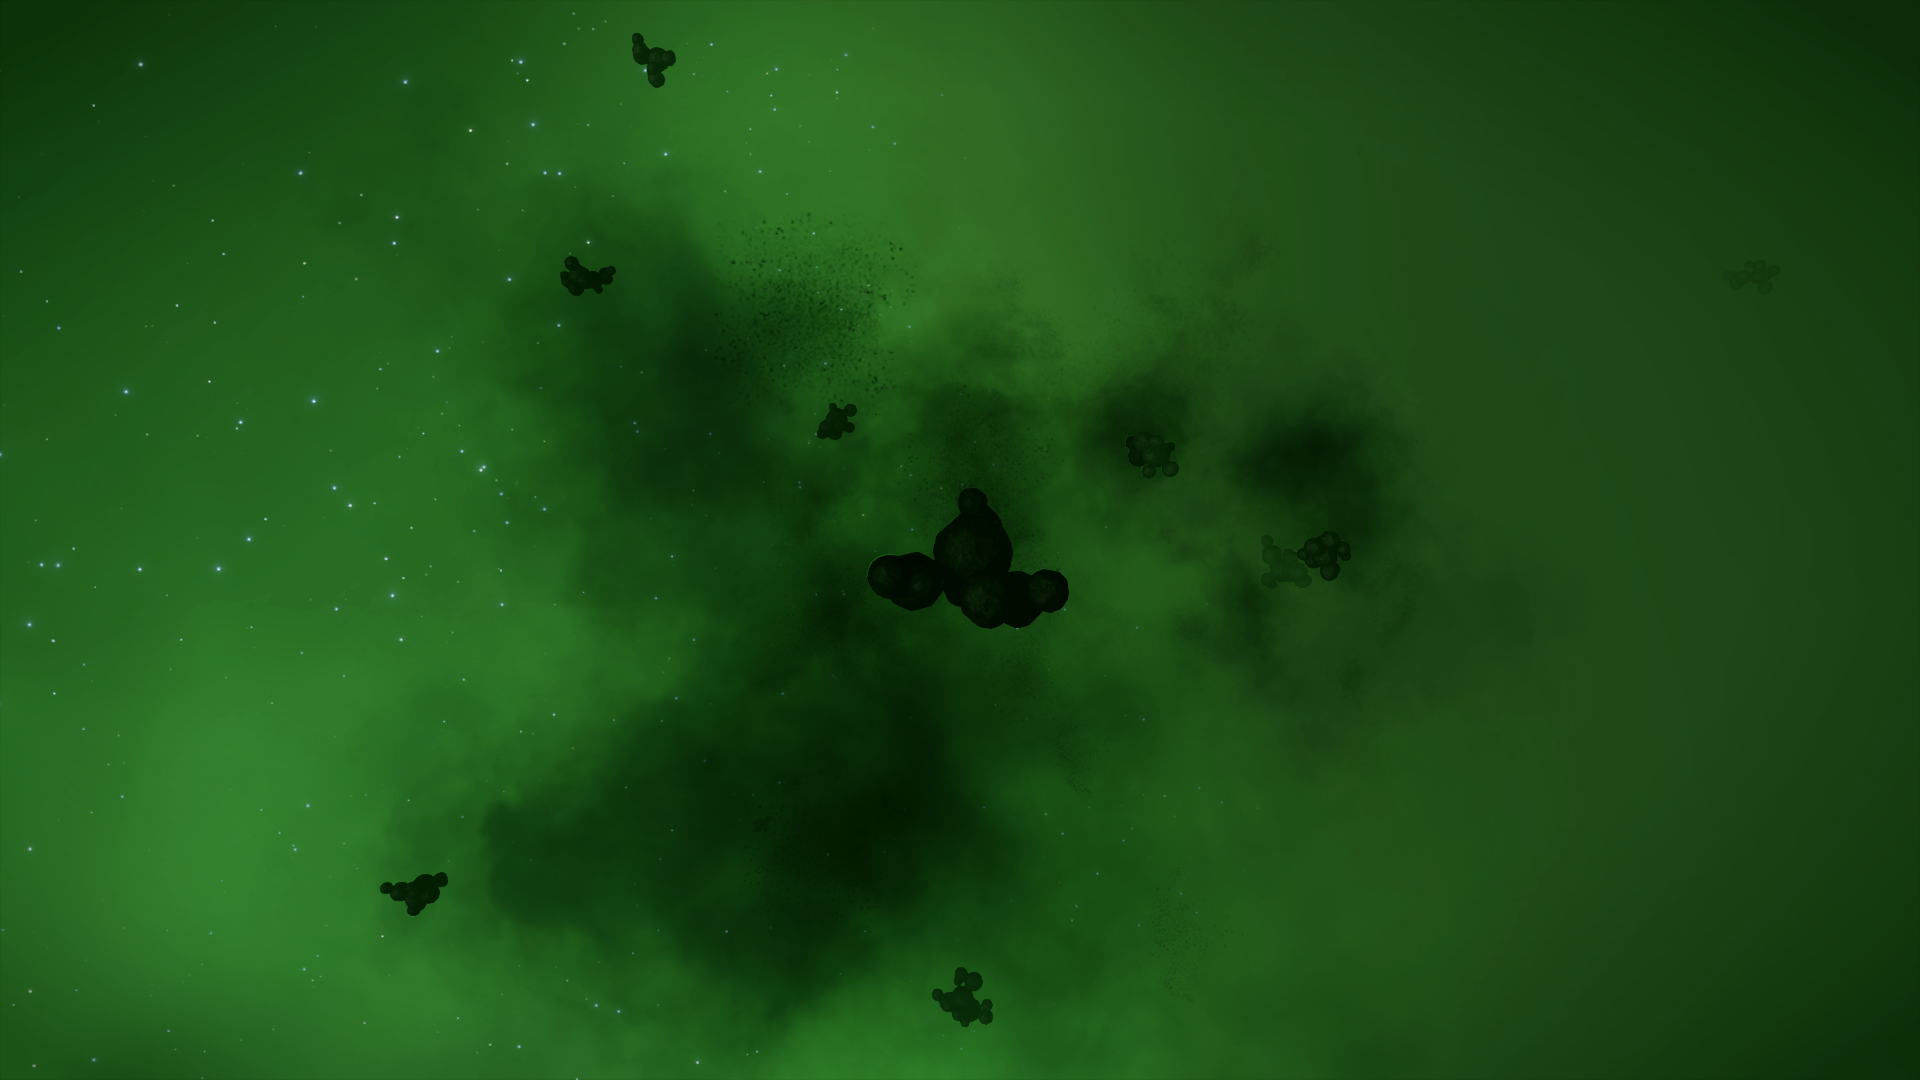 Spheres in the Green Cloud